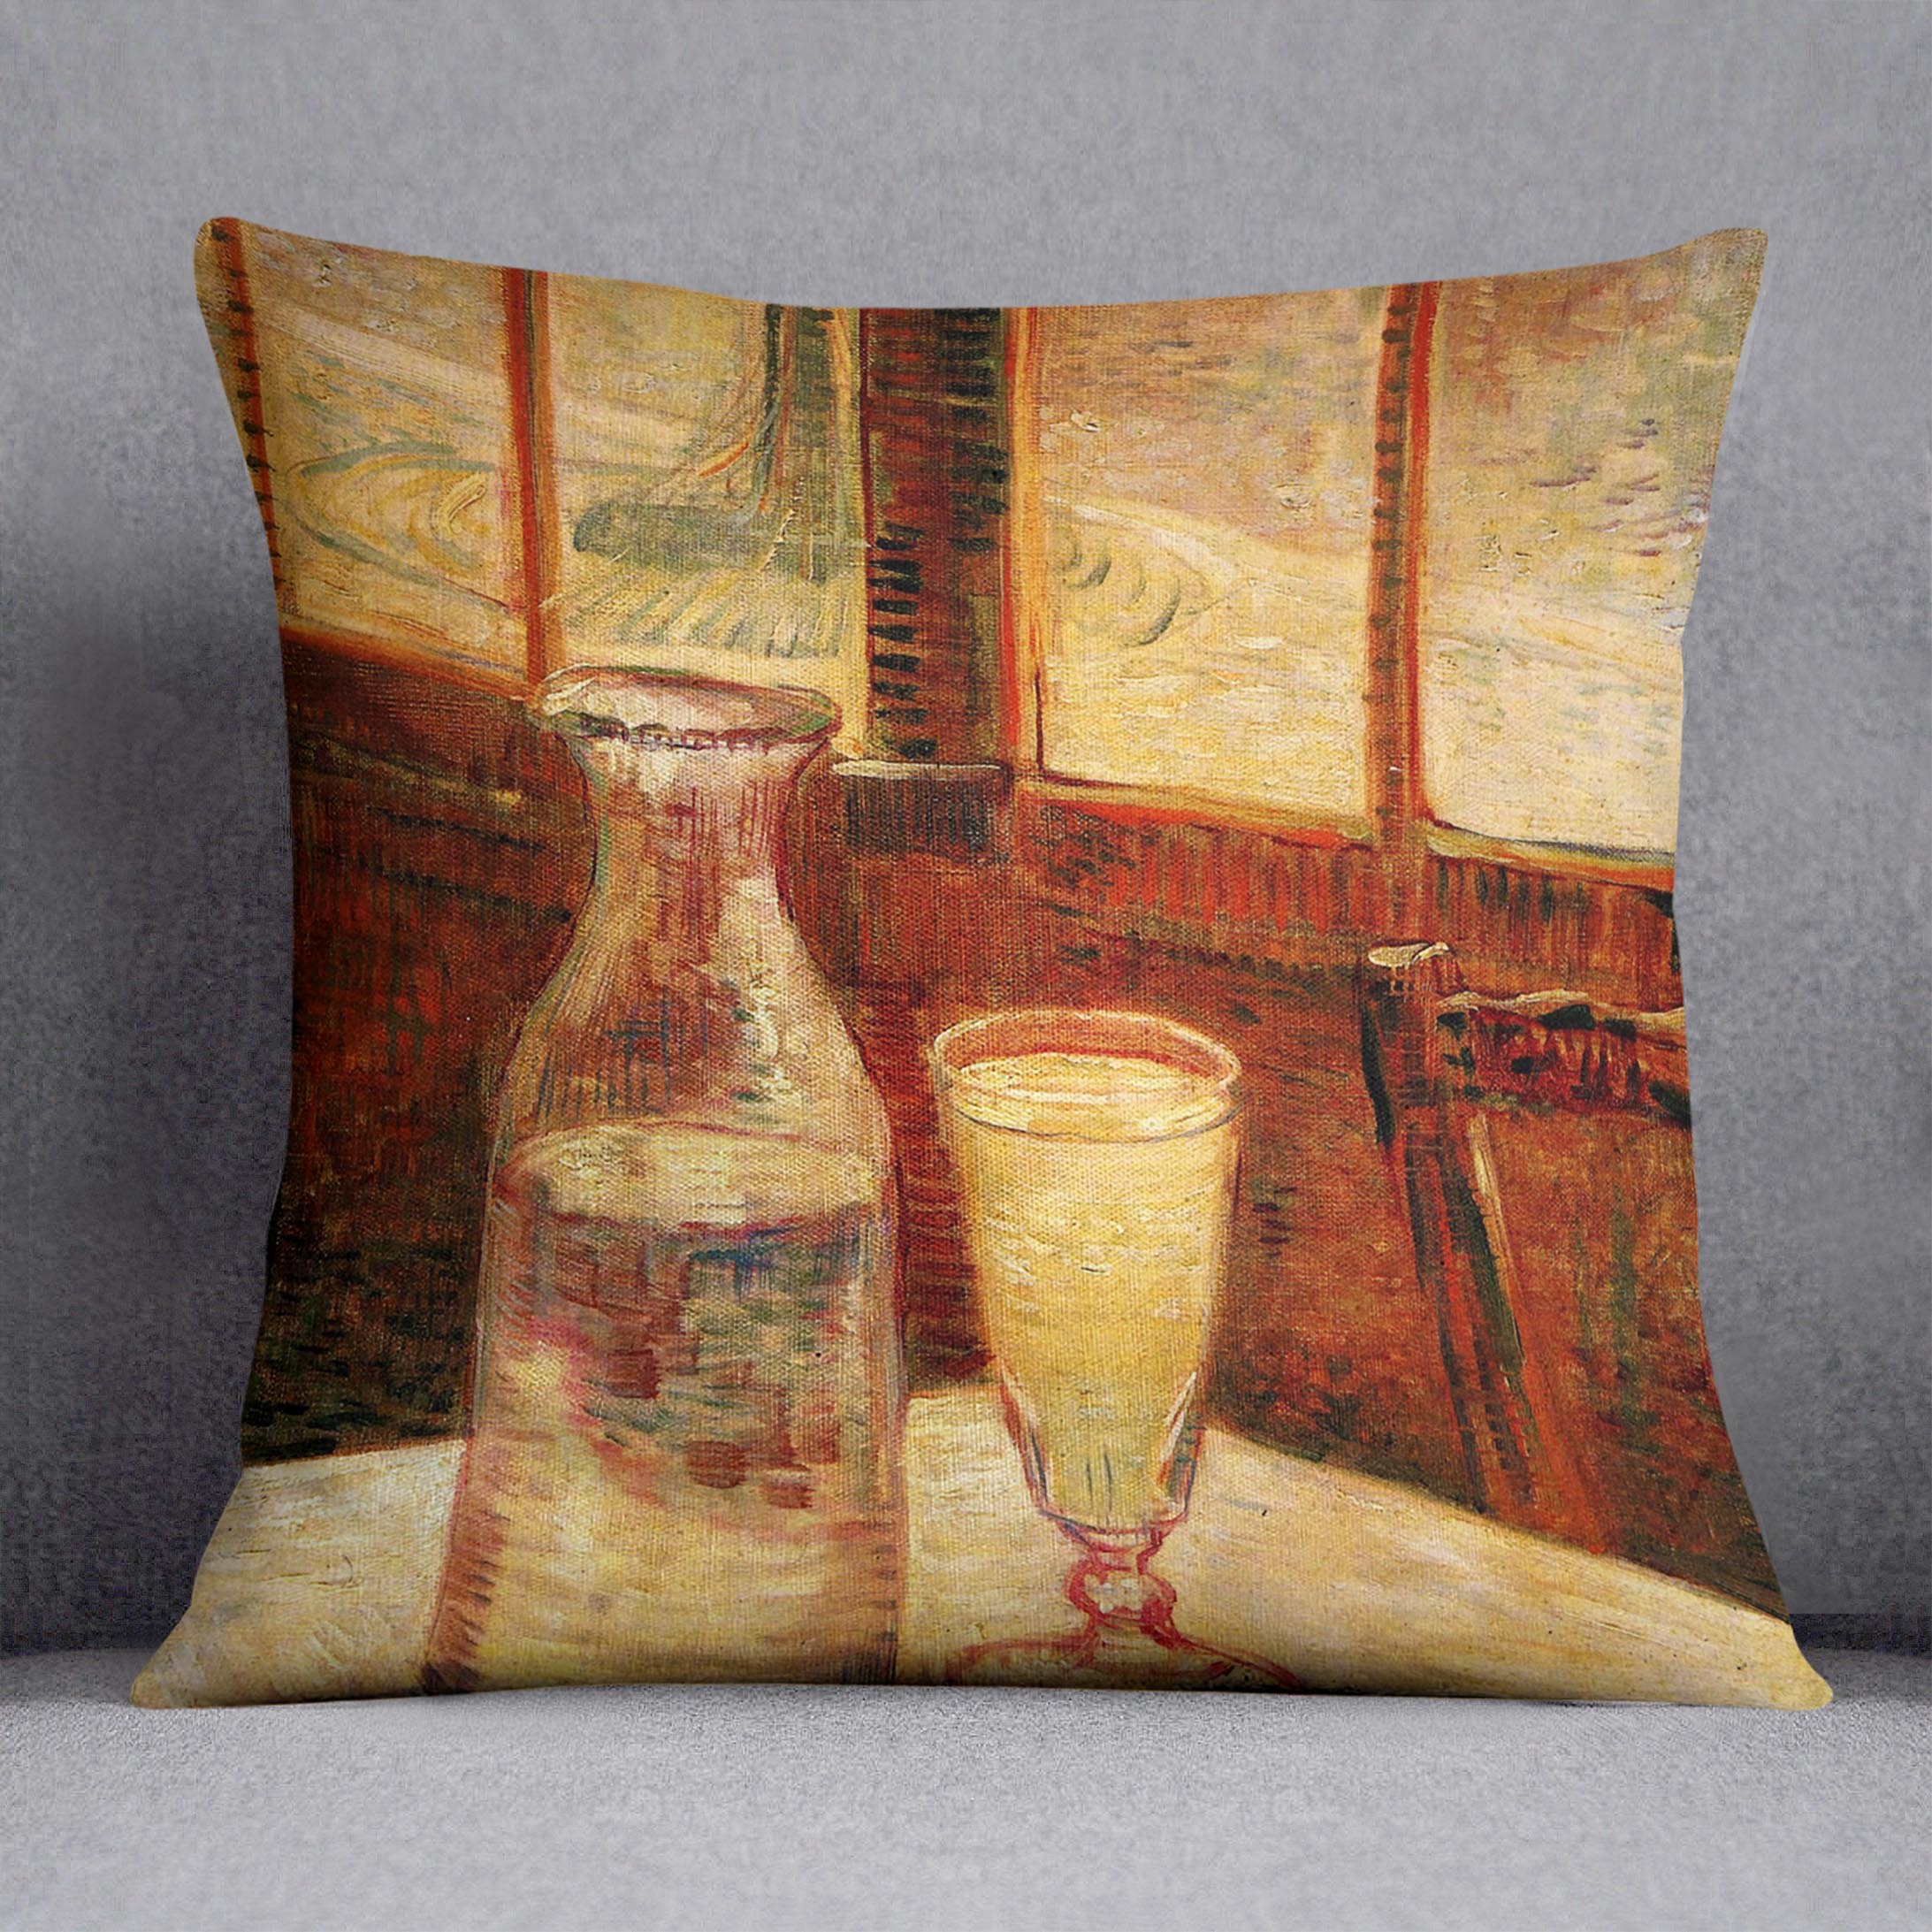 Still Life with Absinthe by Van Gogh Cushion